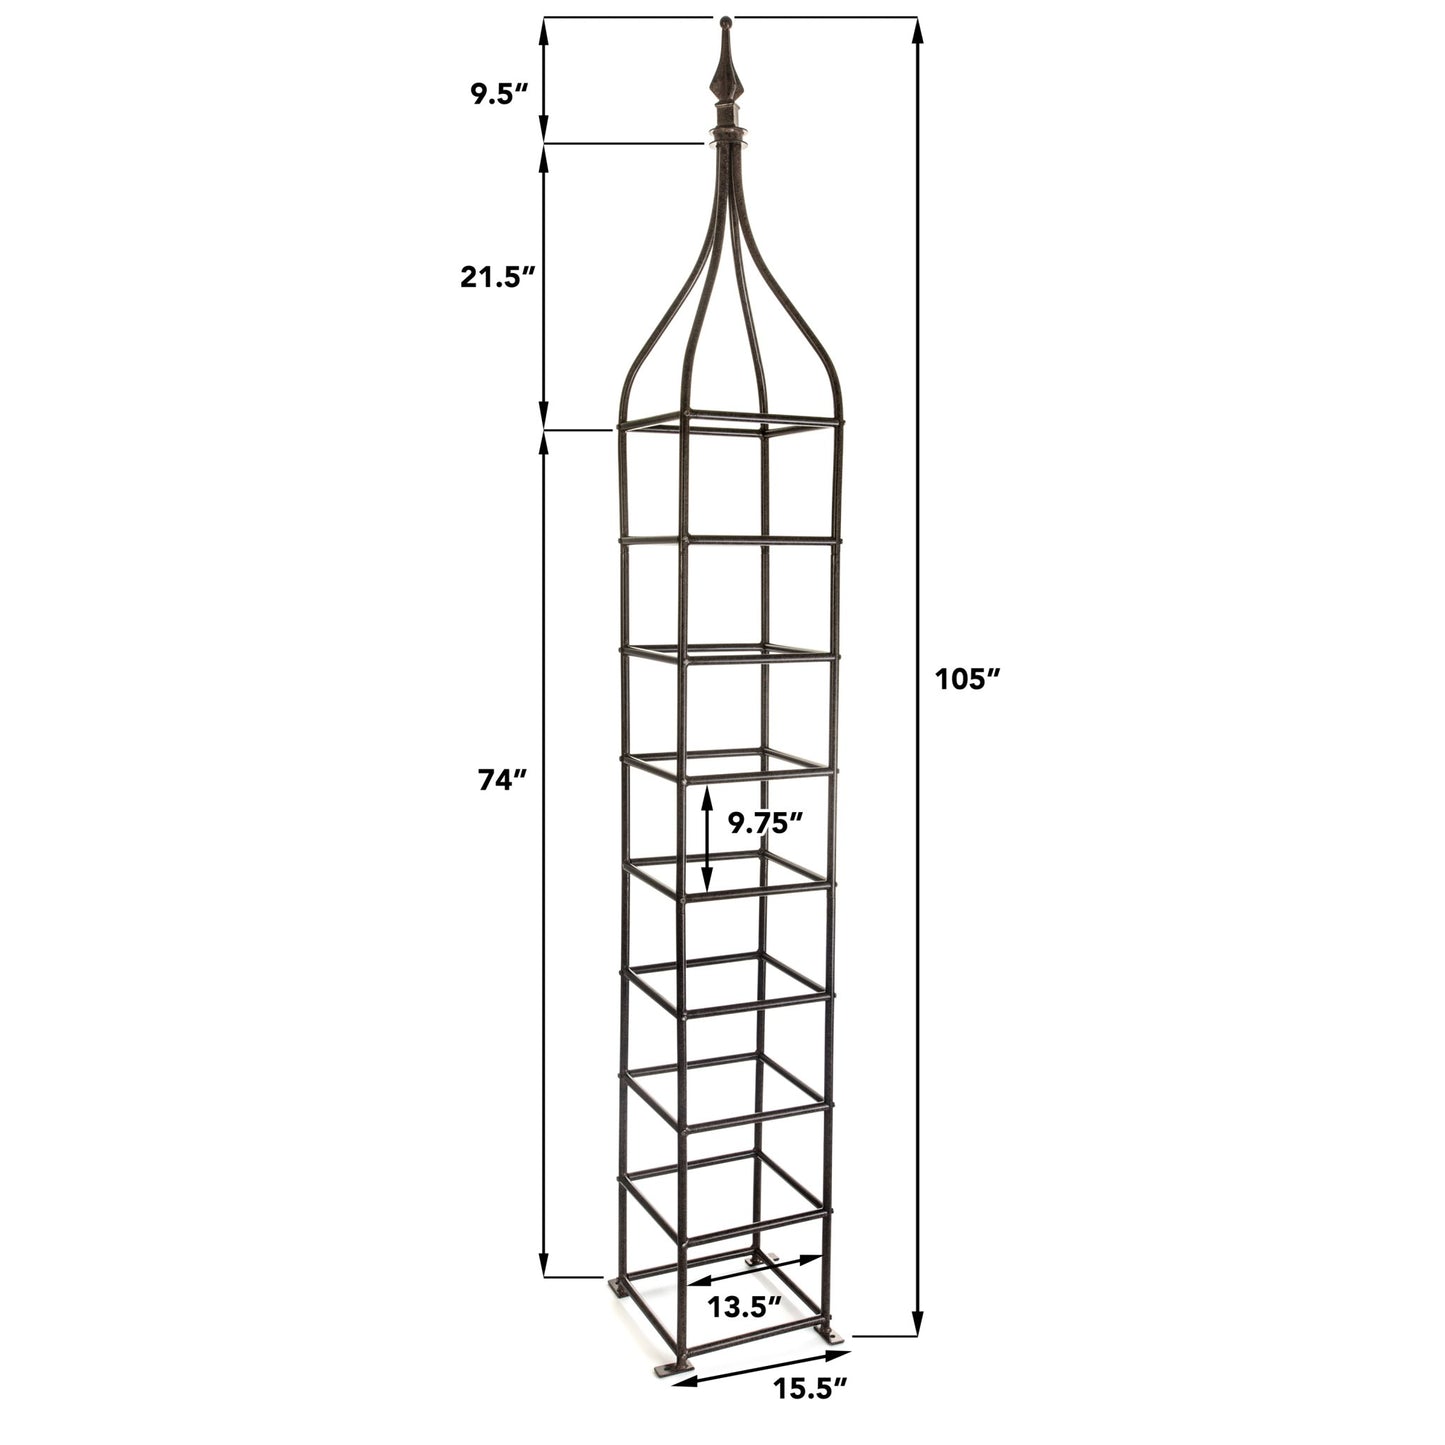 H Potter Garden Obelisk Trellis for Climbing Plants Metal Landscape Structure GAR665